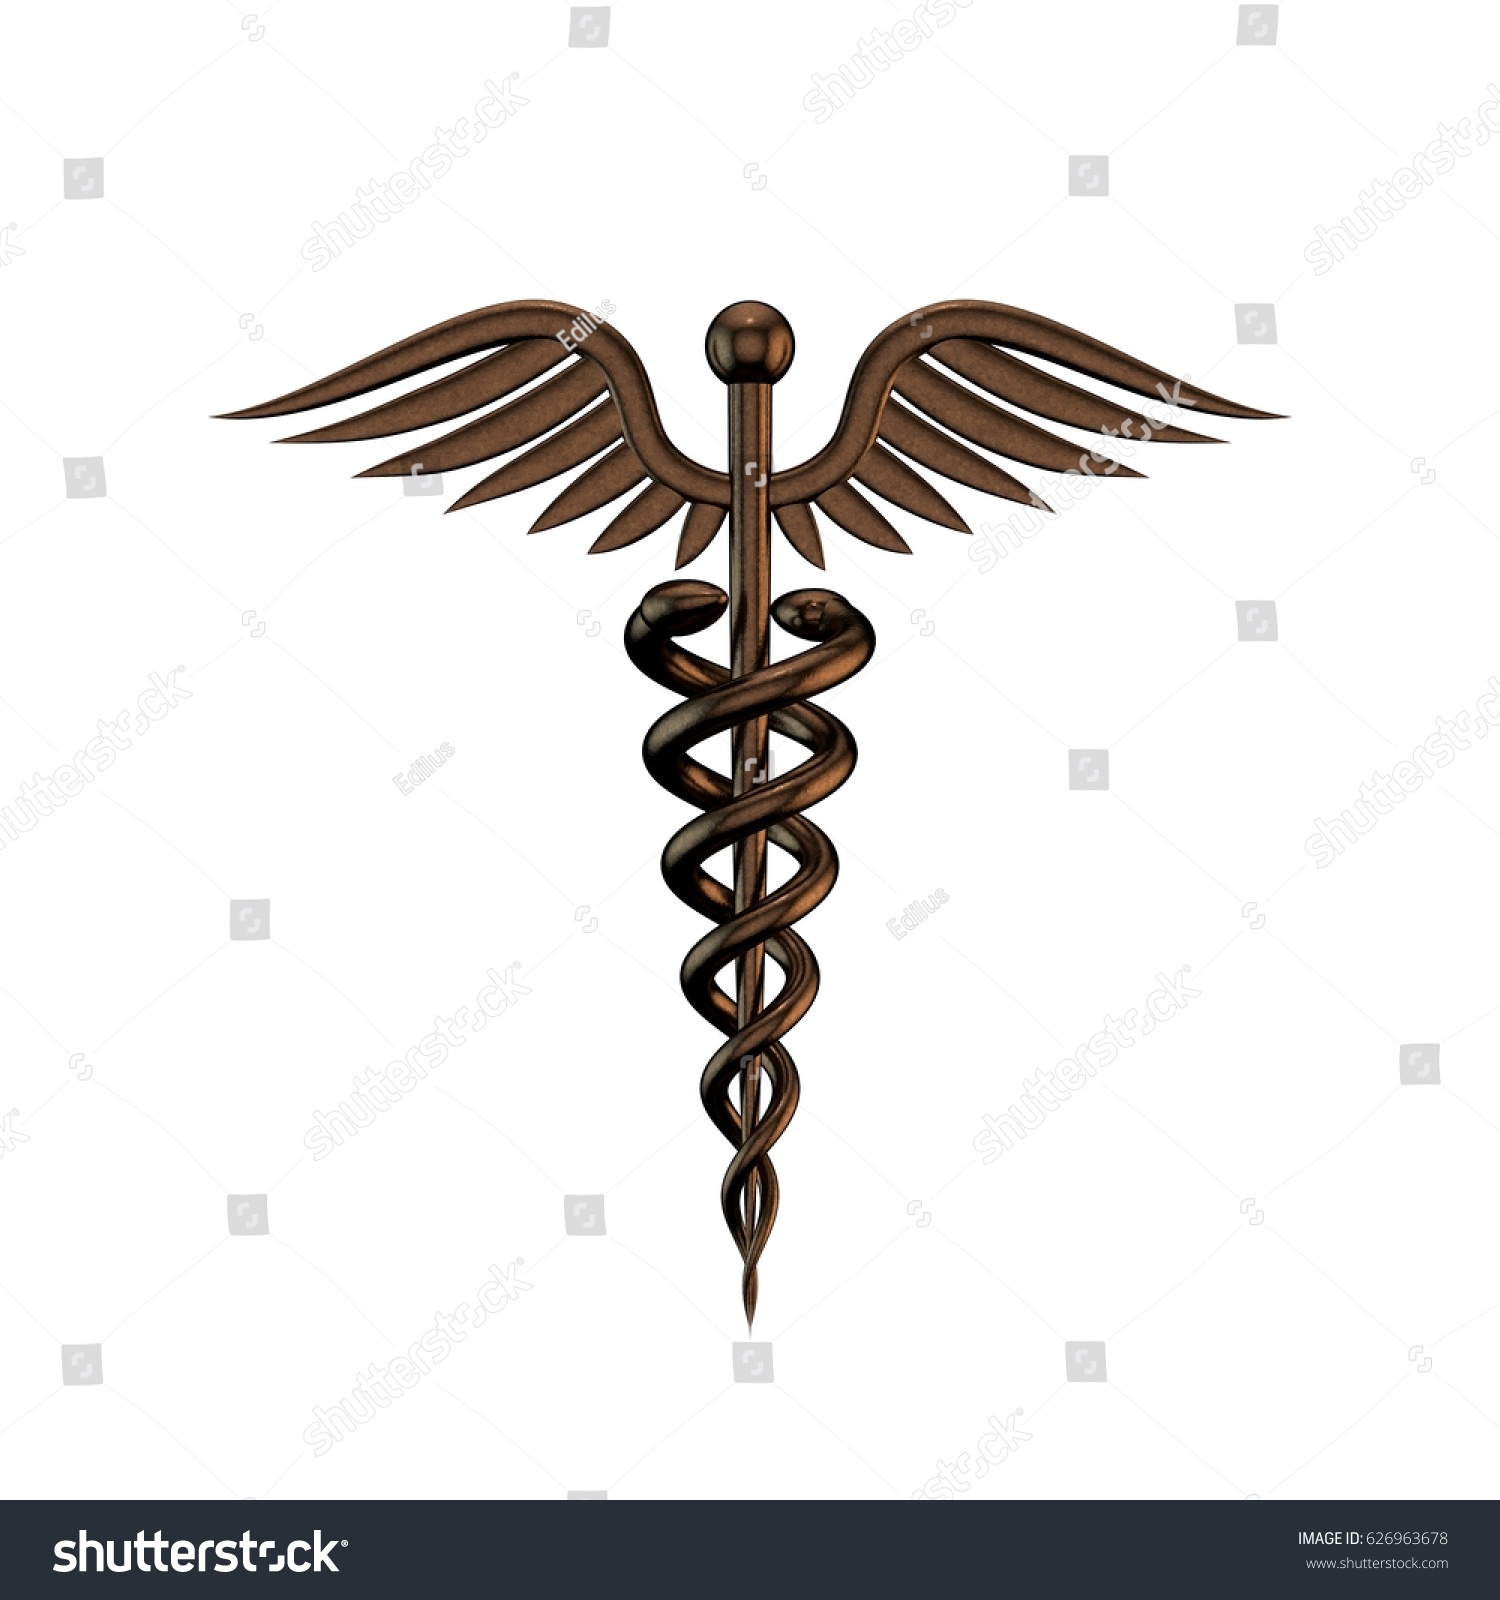 Metallic medical symbol. Isolated on white background. 3D rendering illustration. #626963678